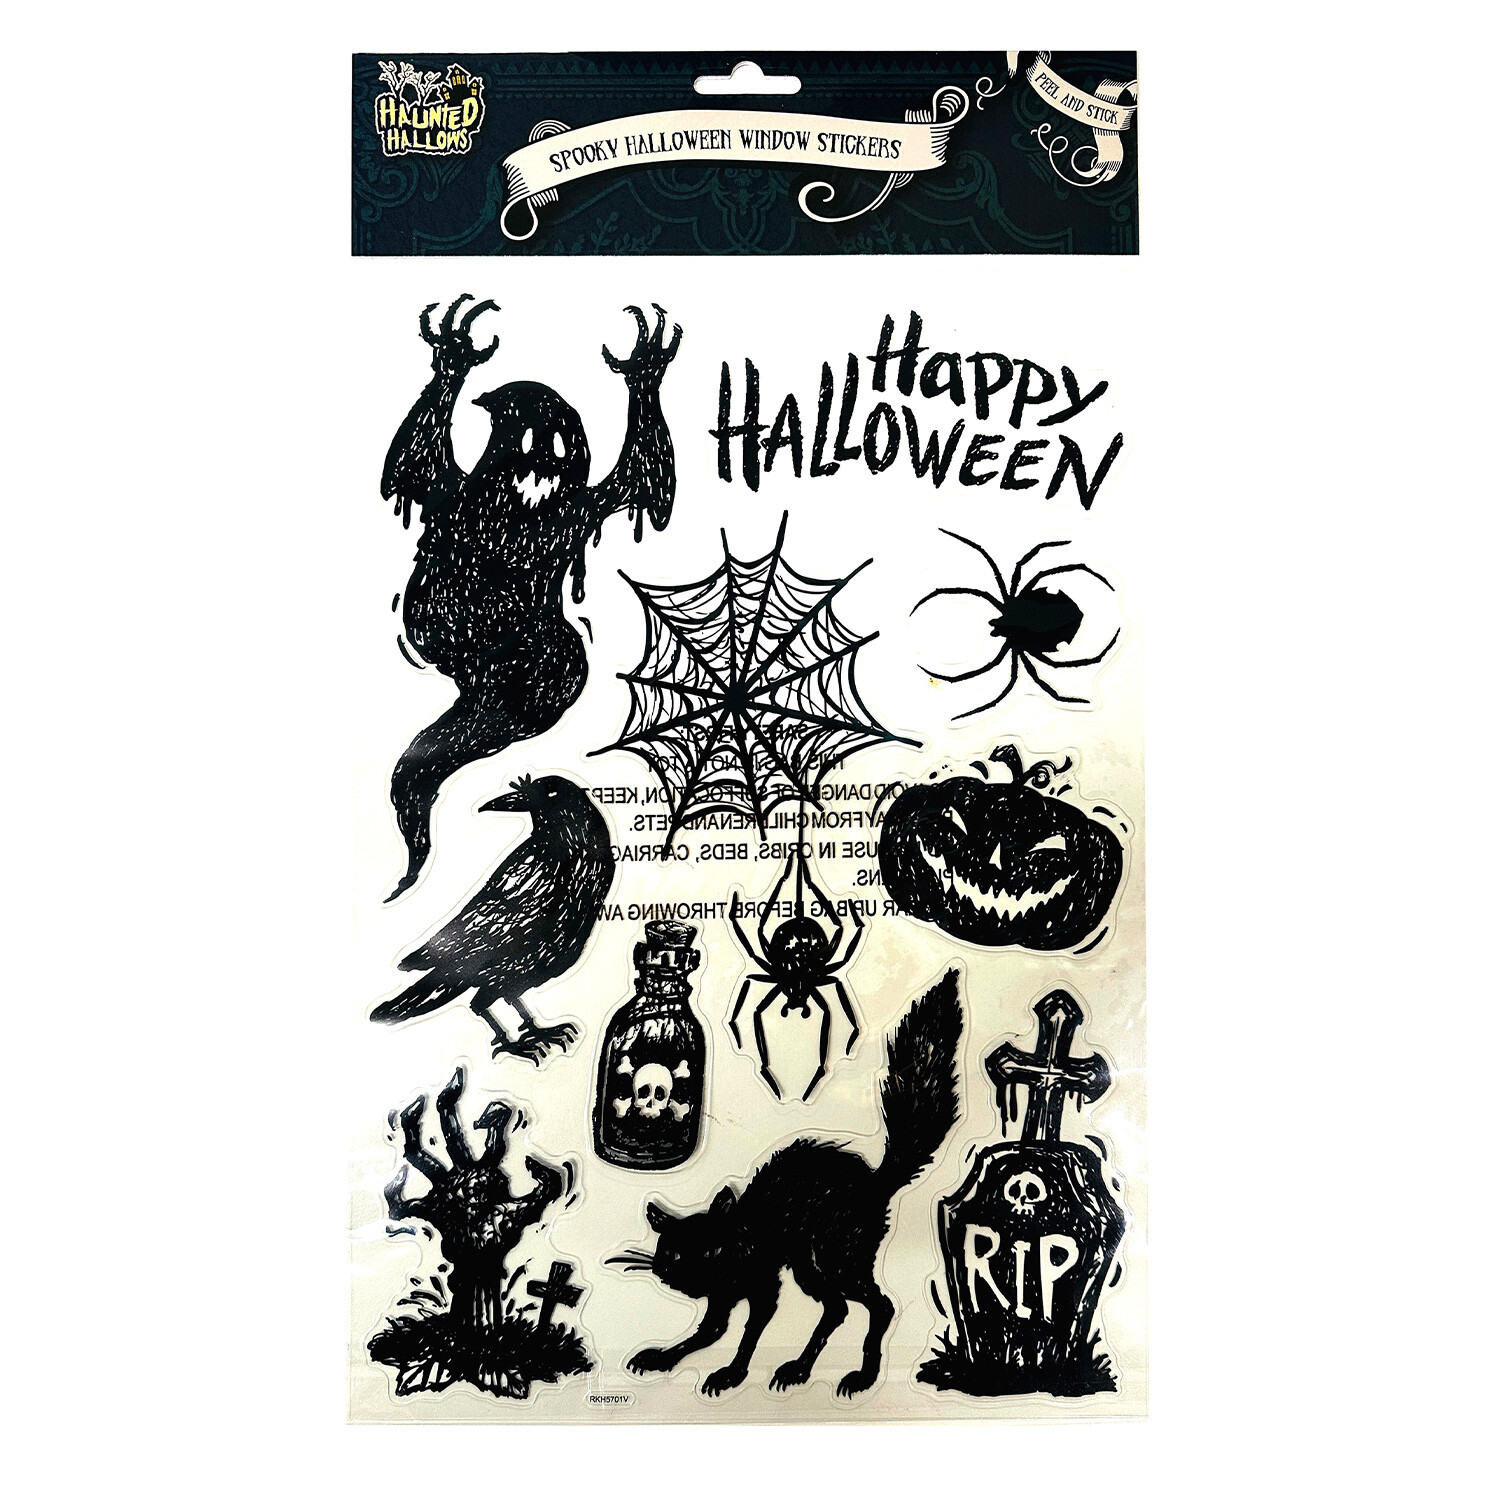 Haunted Hallows Spooky Halloween Window Stickers Image 2